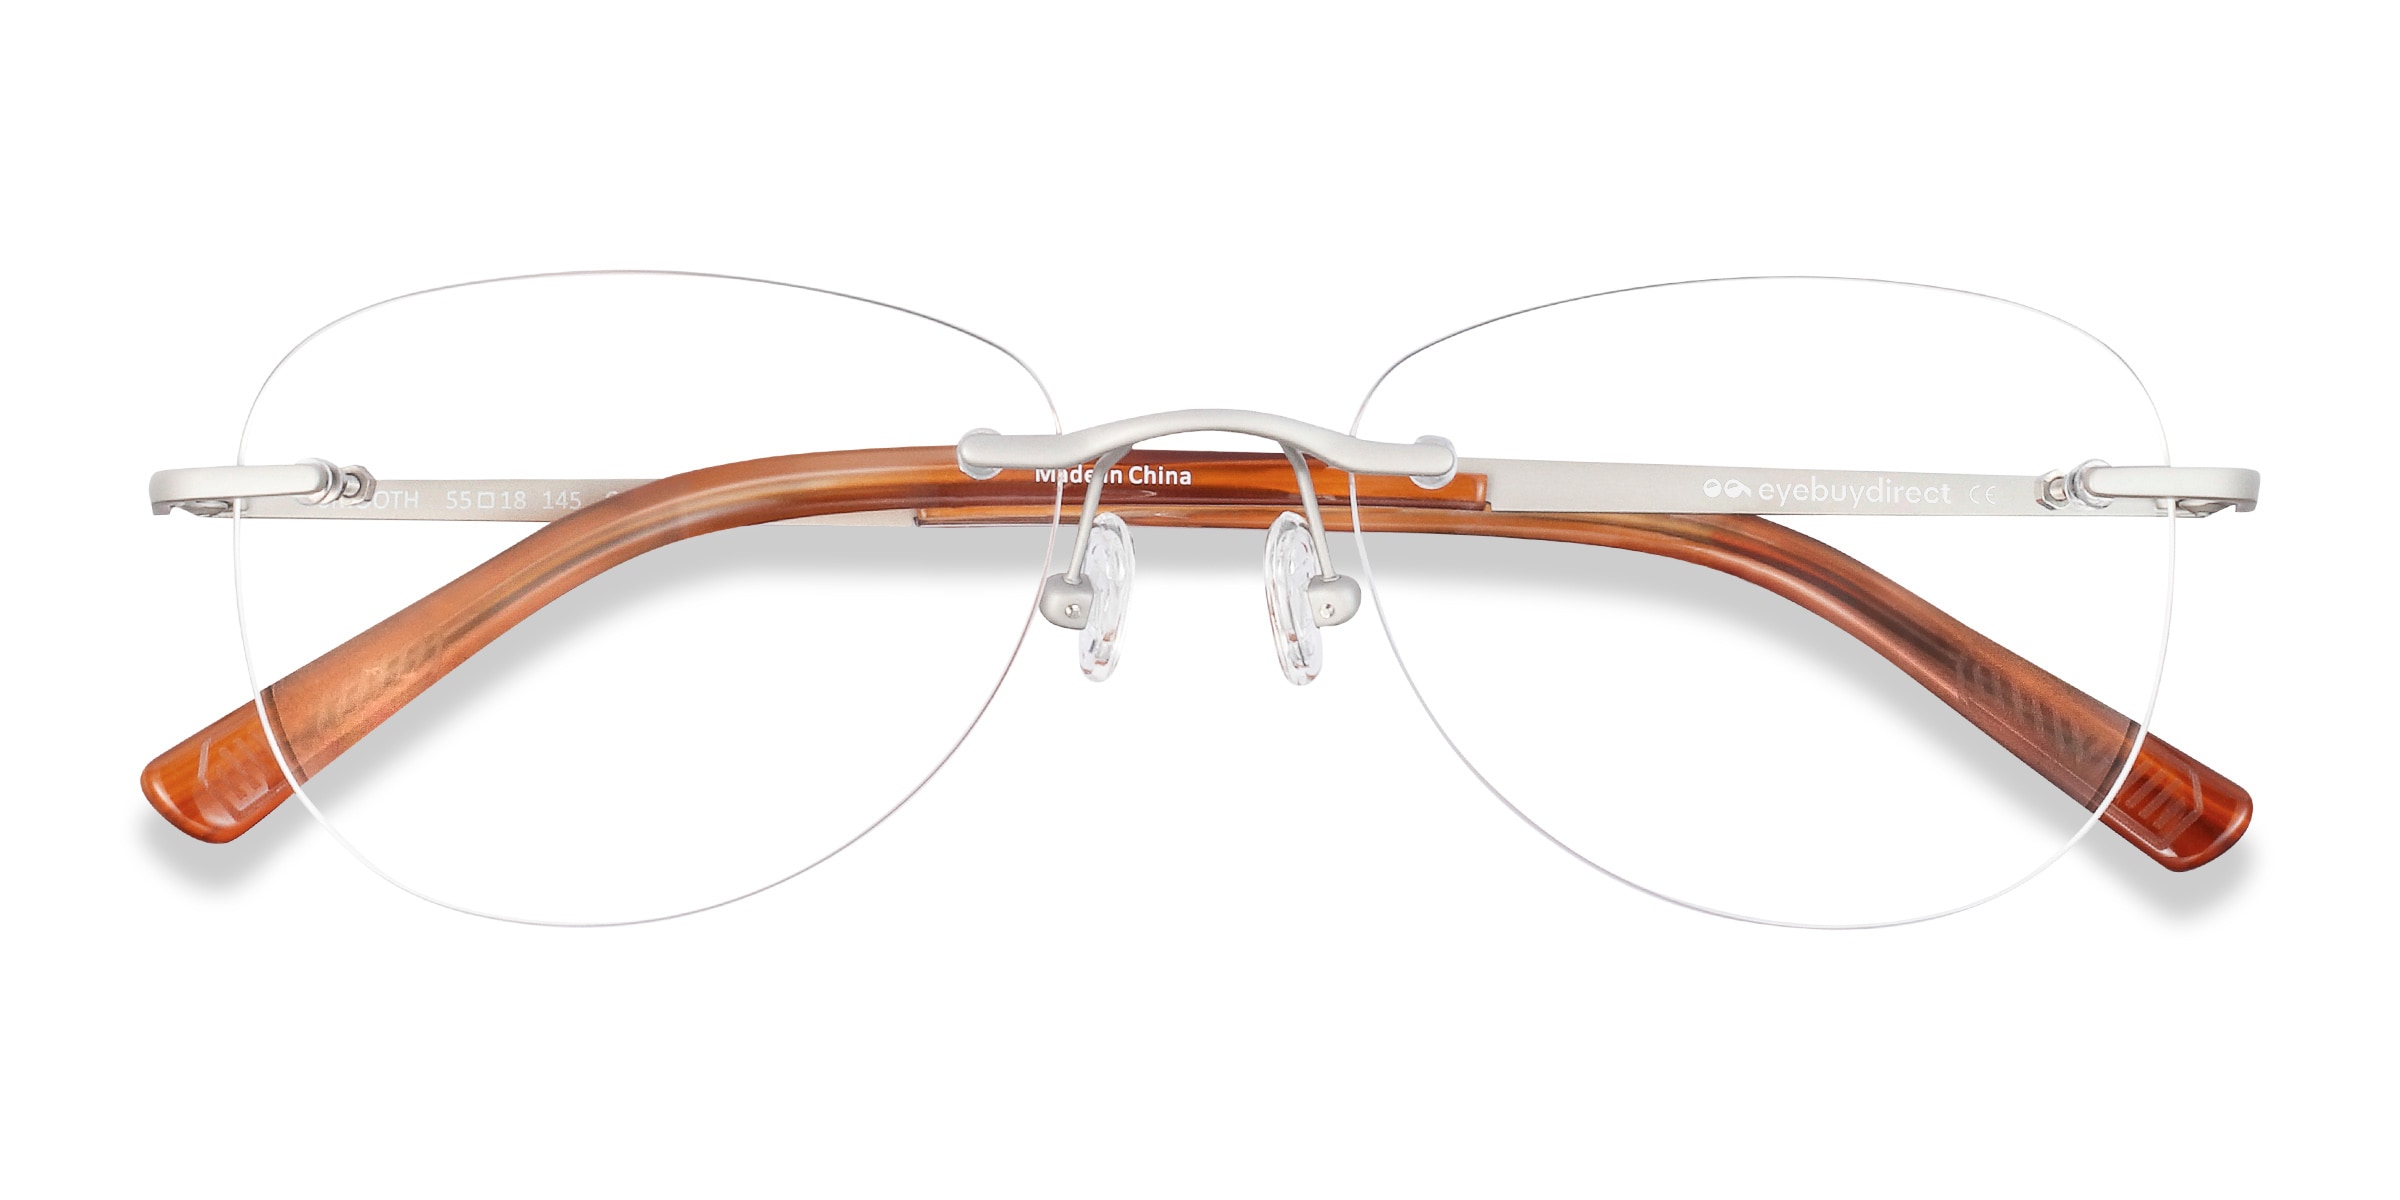 Optical Eyewear - Oval Shape, Metal Half Rim Frame - Prescription  Eyeglasses RX, Shiny Silver 